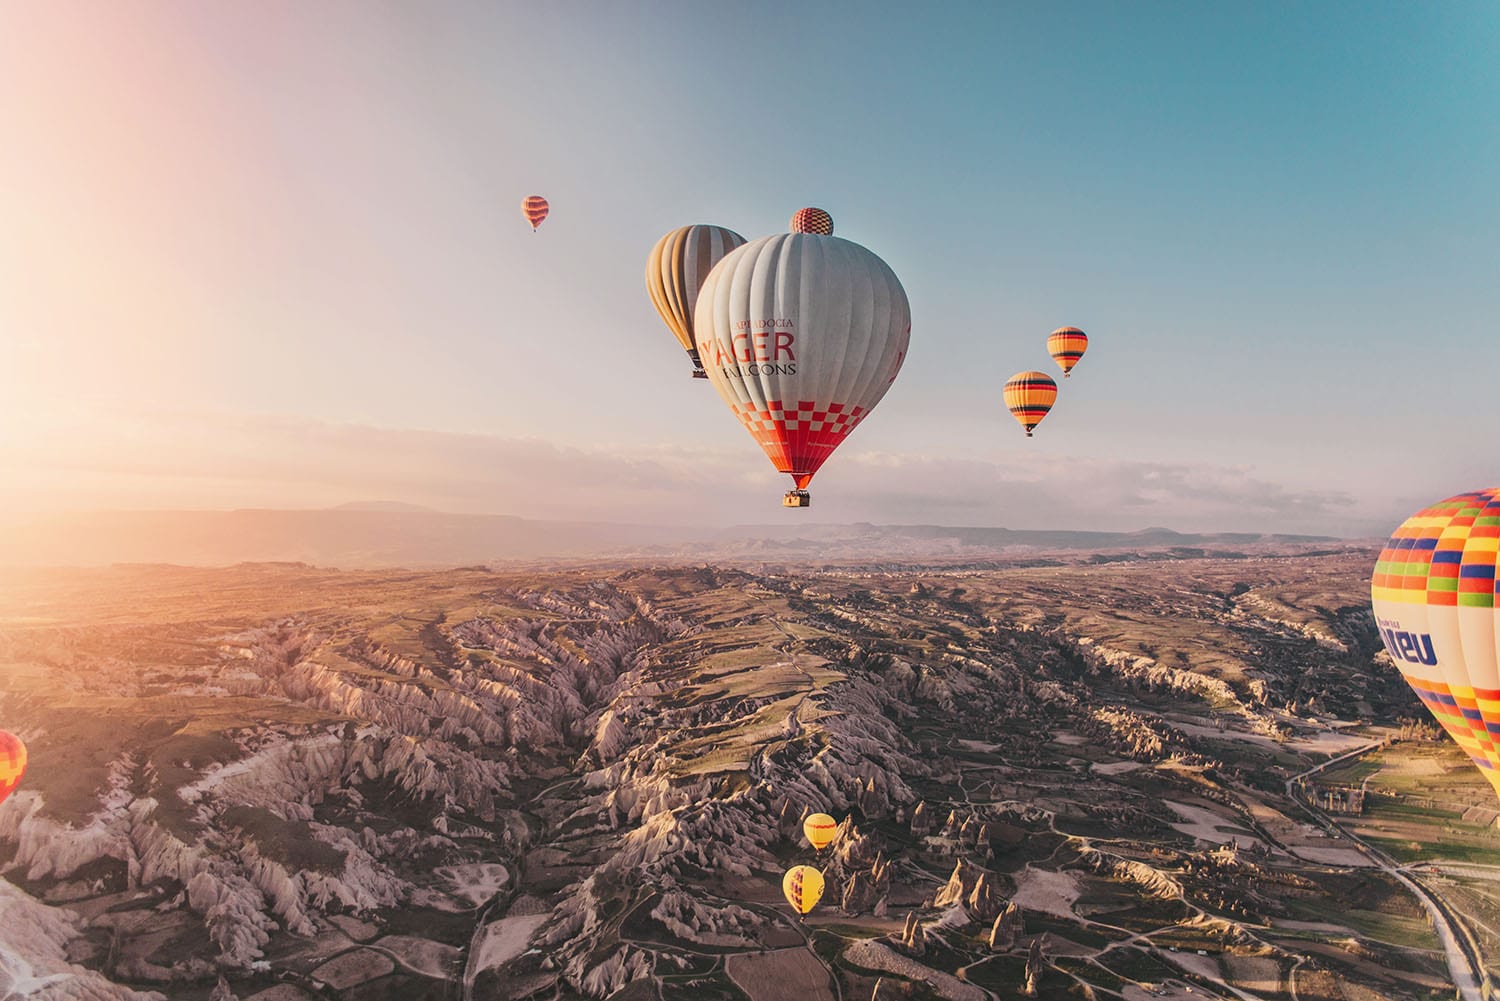 Stunning sunrise with hot air balloons in Cappadocia, Turkey